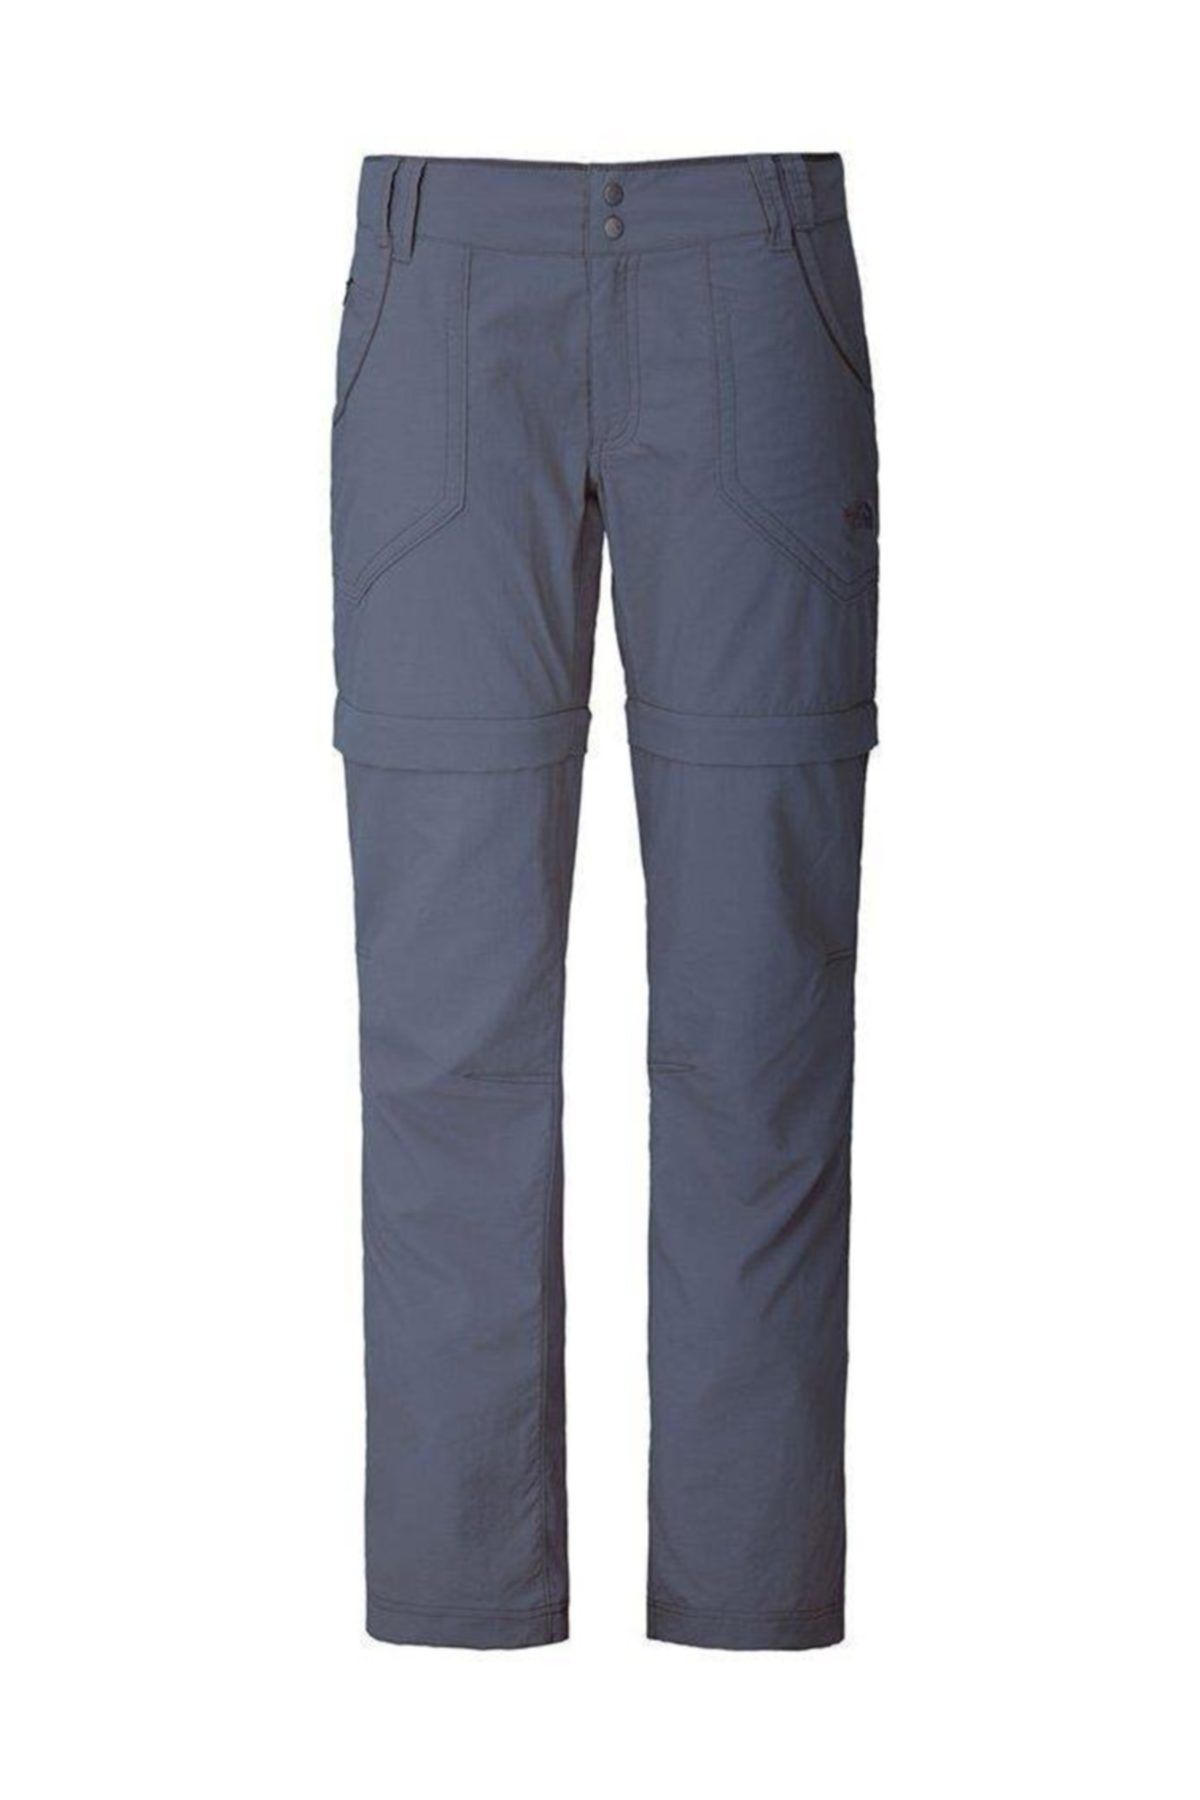 The North Face Horizon Convertible Kadın Pantolon - T0CEF8174